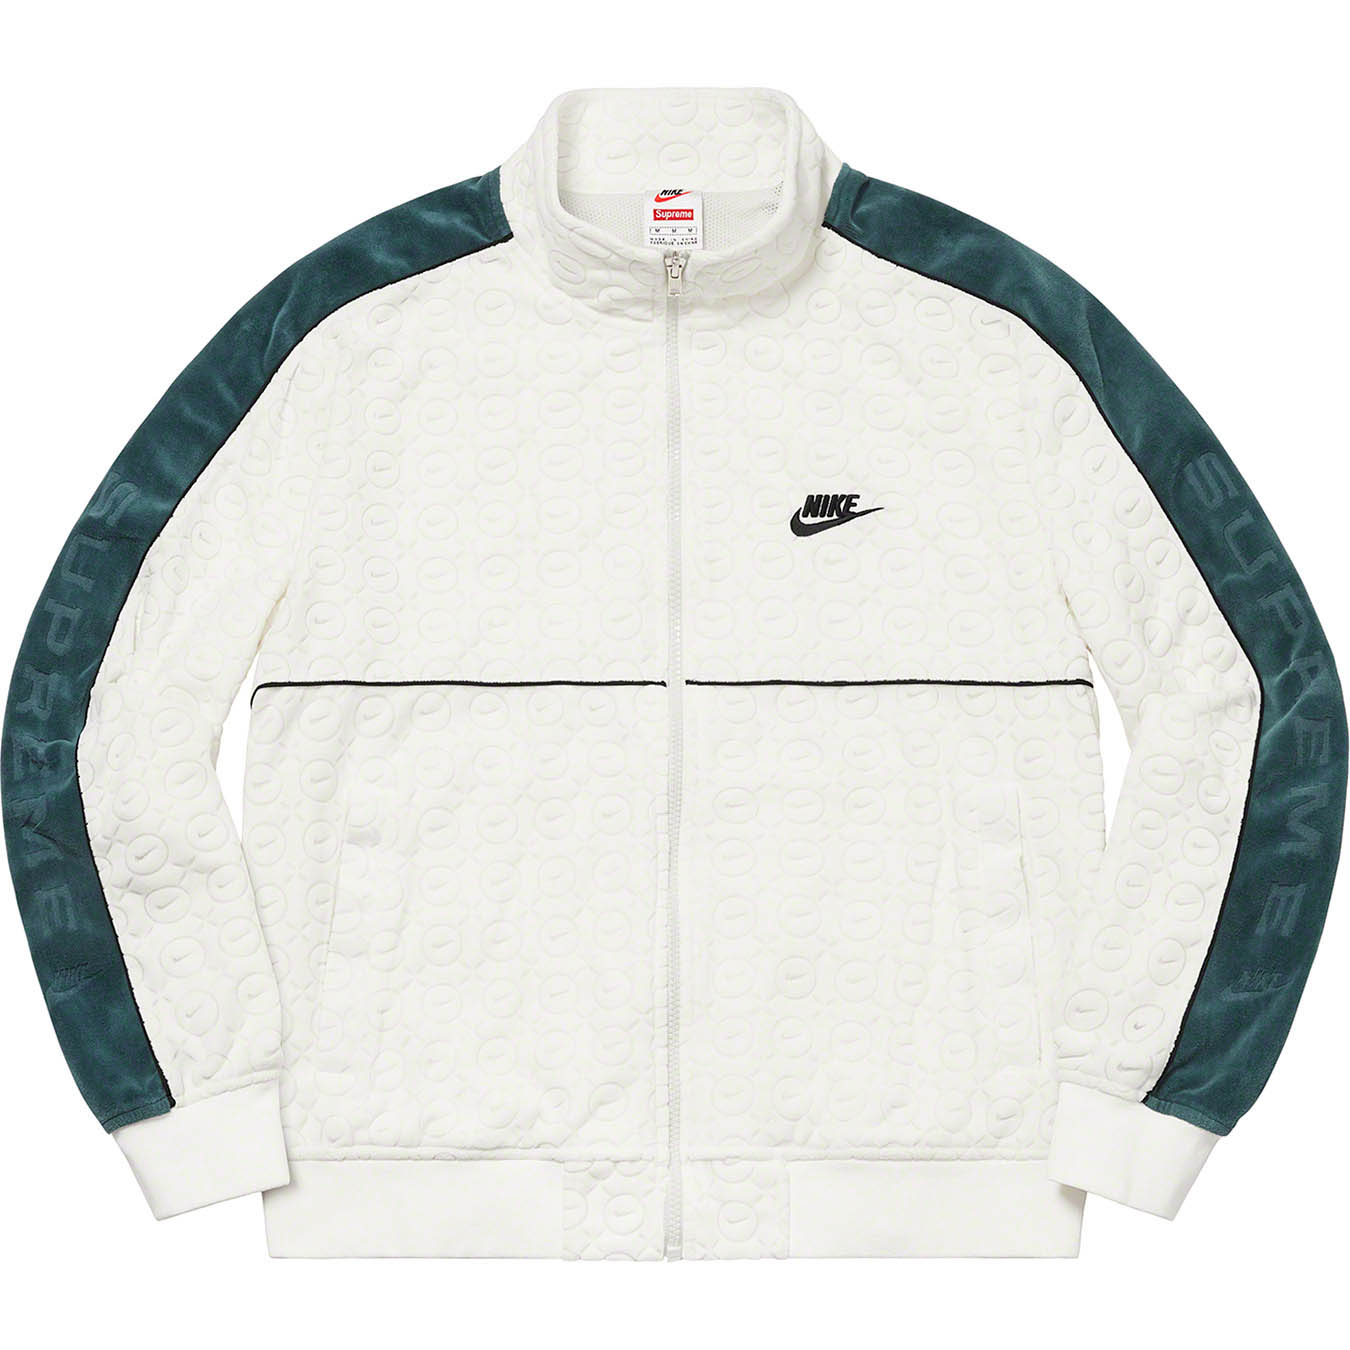 Supreme®/Nike® Velour Track Jacket